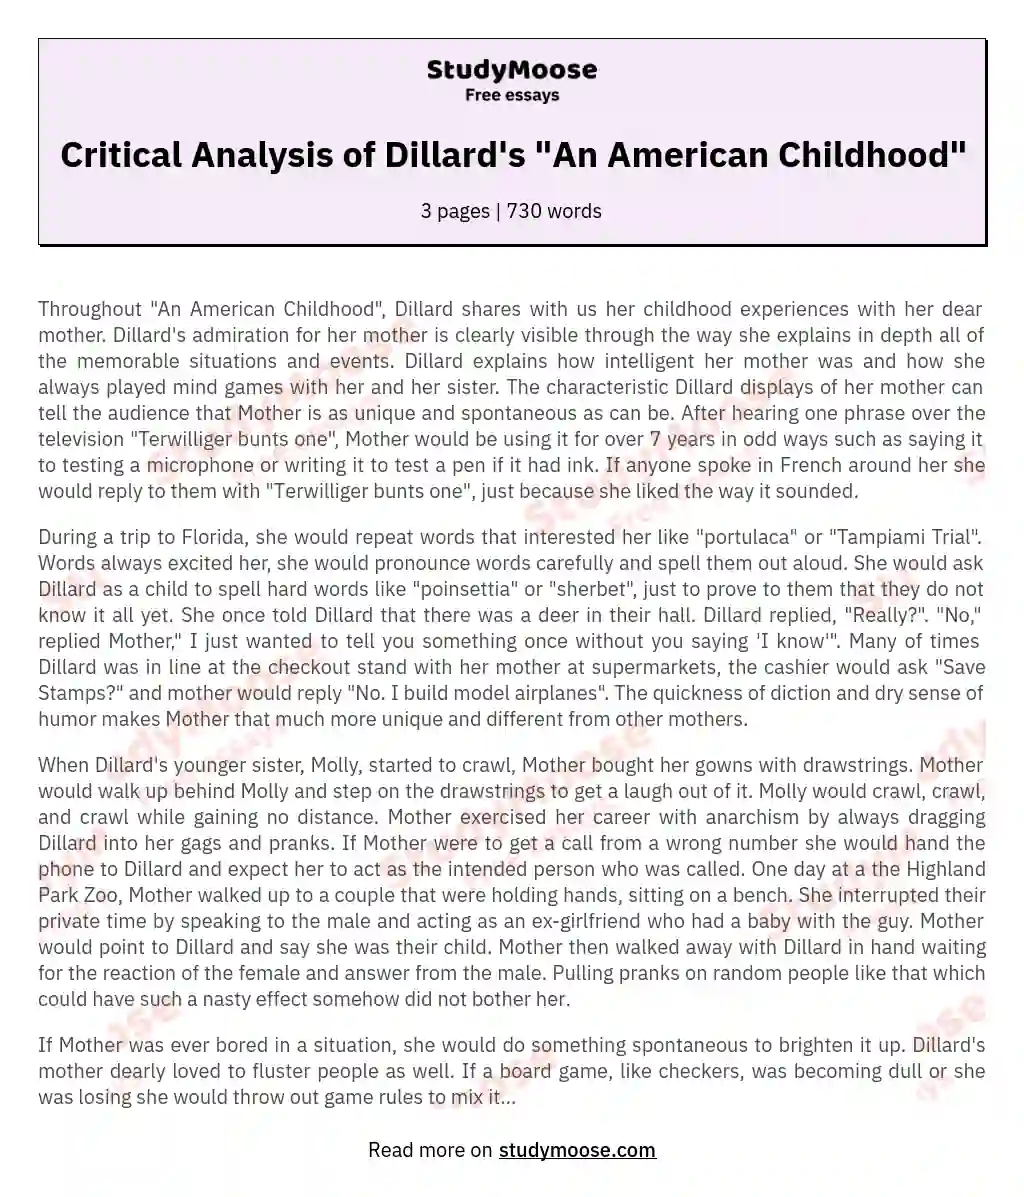 Critical Analysis of Dillard's "An American Childhood" essay